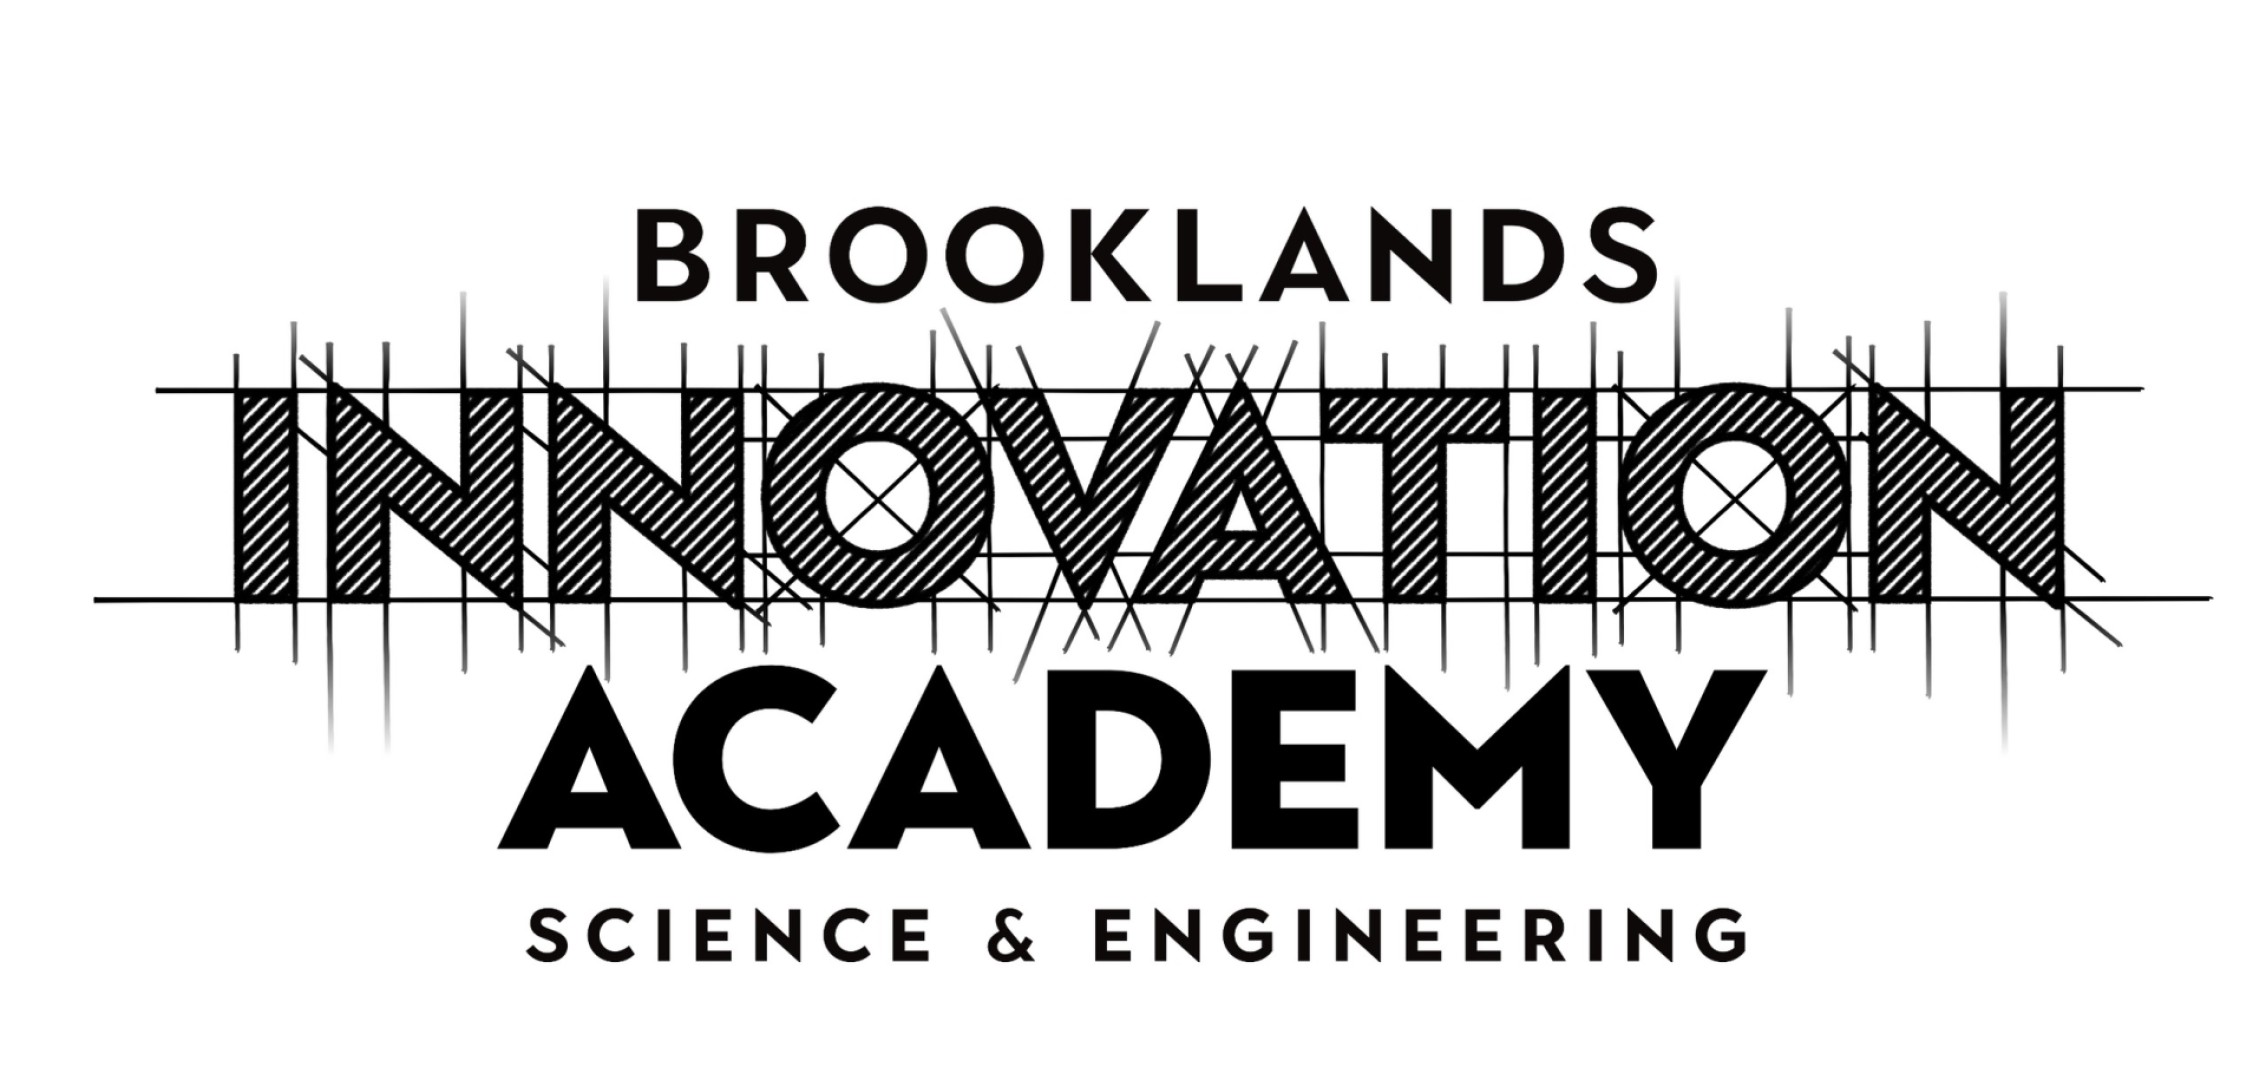 Brooklands Innovation Academy is go!